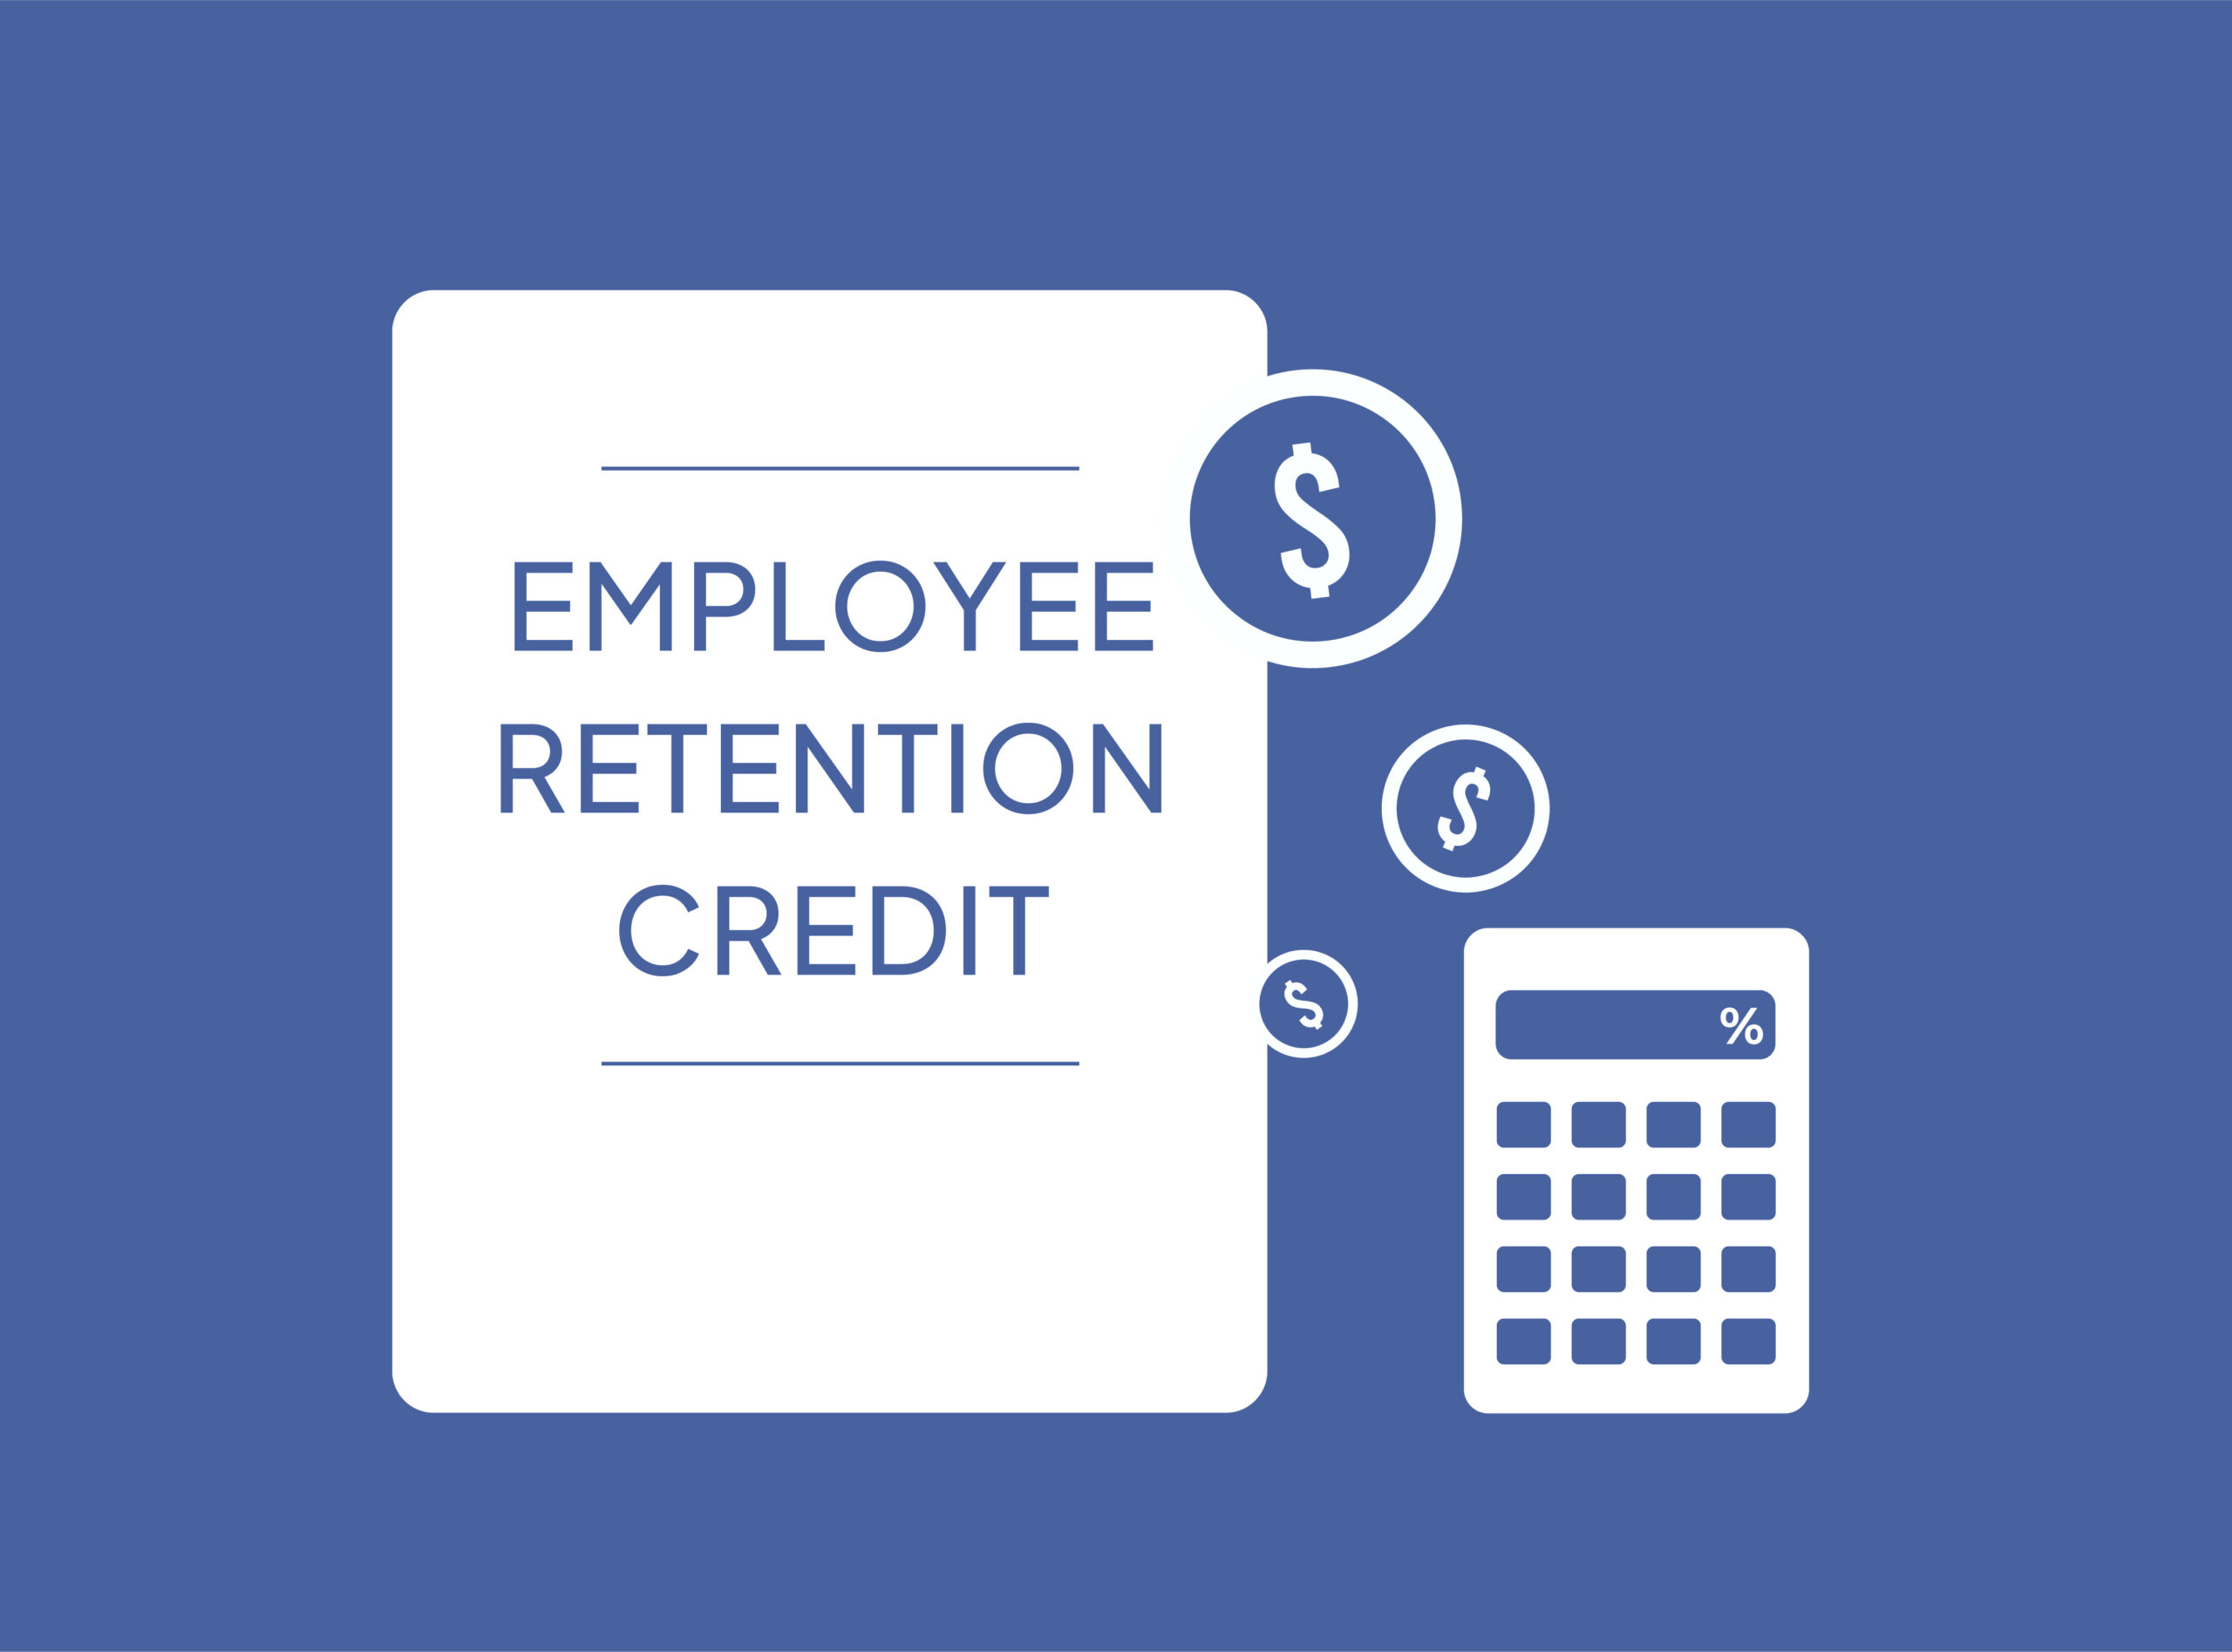 Employee Retention Credit Eligibility